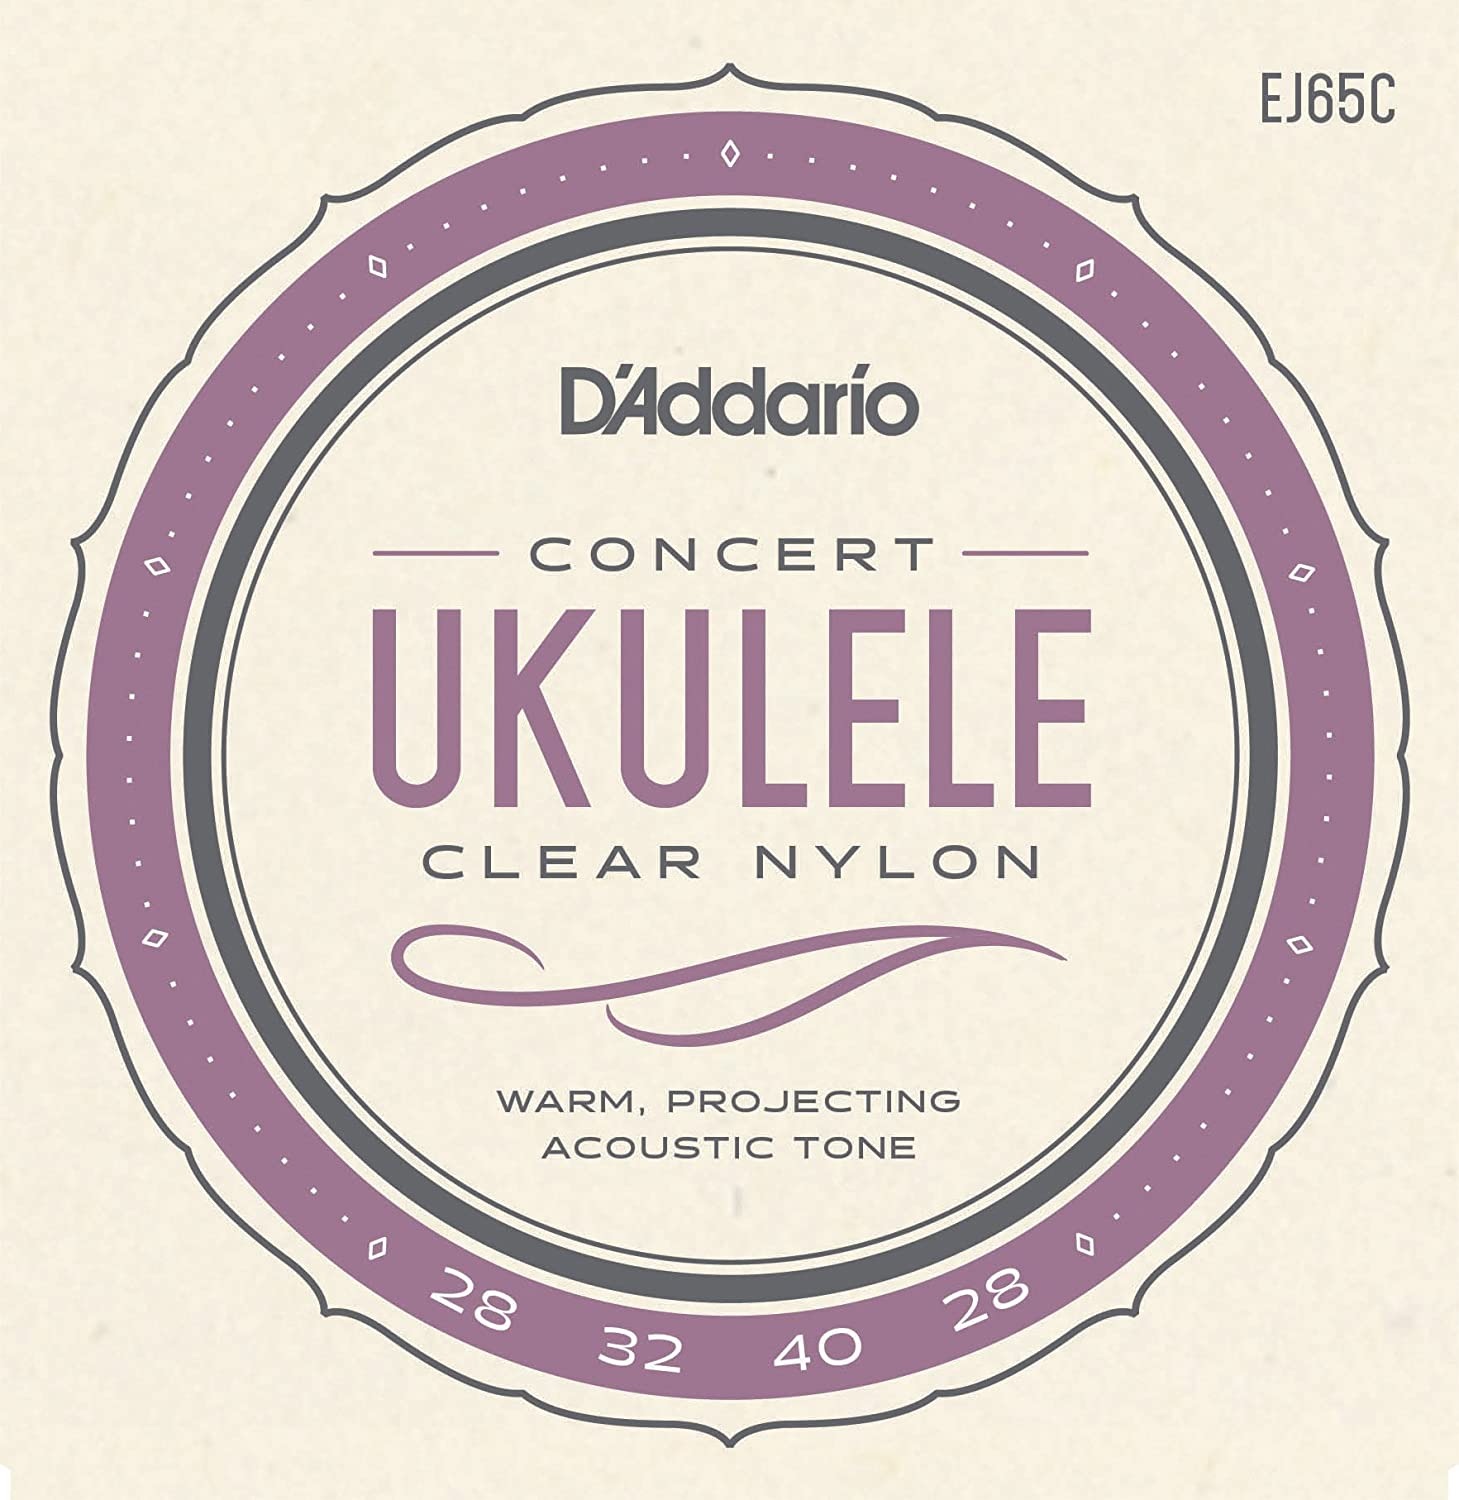 Струны для укулеле D'Addario EJ65C Clear Nylon Concert Ukulele Strings 28/28